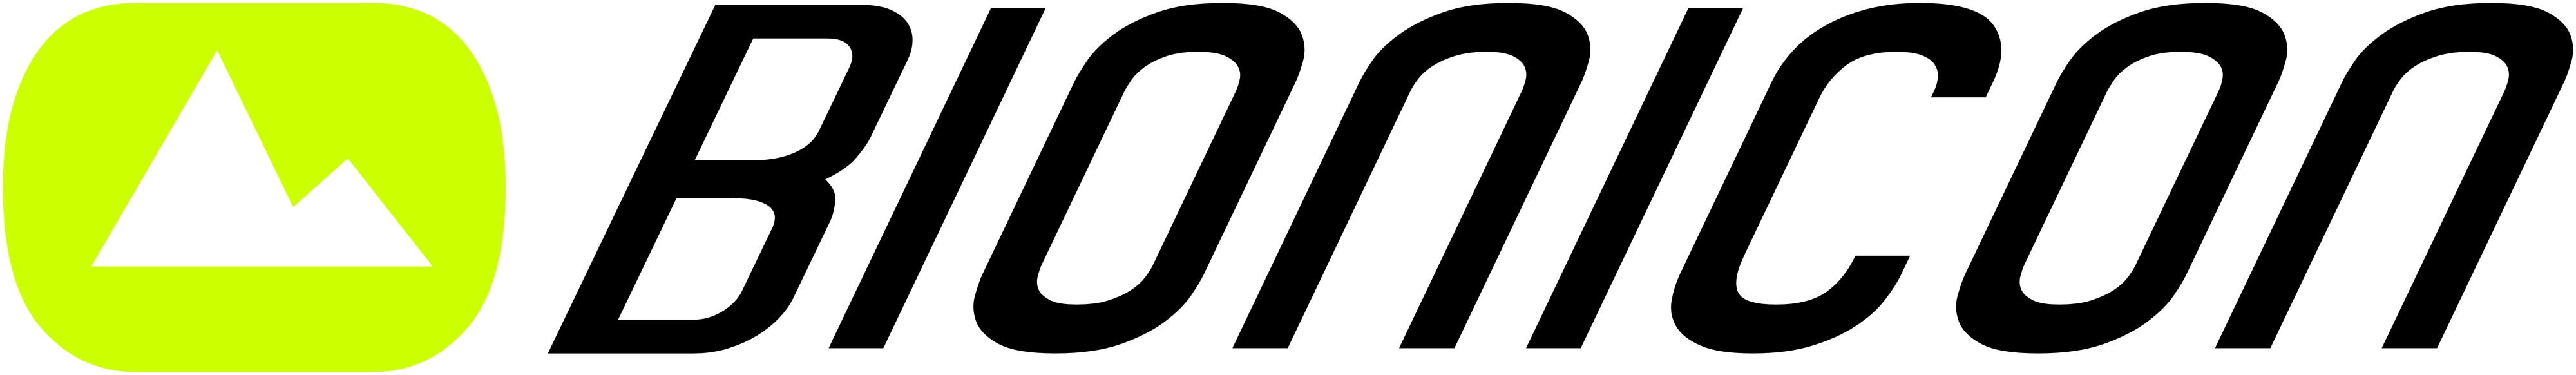 bionicon_logo_2014.jpg